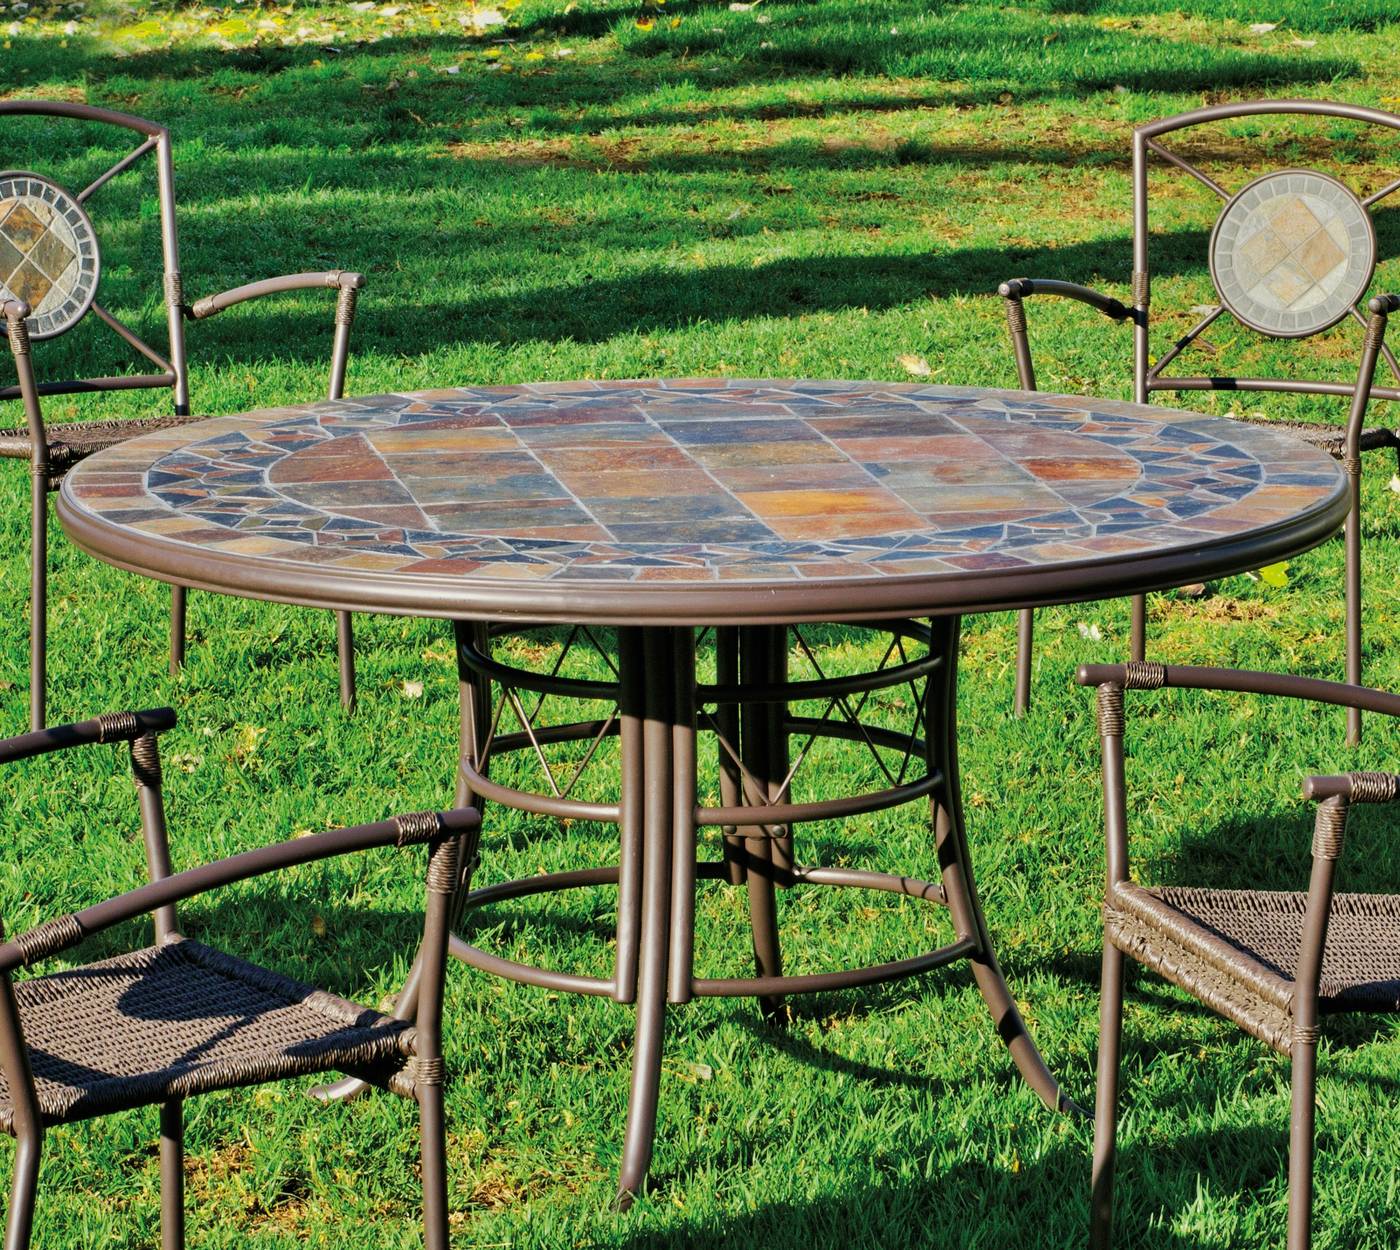 Set Mosaico Luxe Sotomar-140 - Conjunto lujoso de forja: mesa con panel mosaico de piedra + 6 sillones de forja apilables